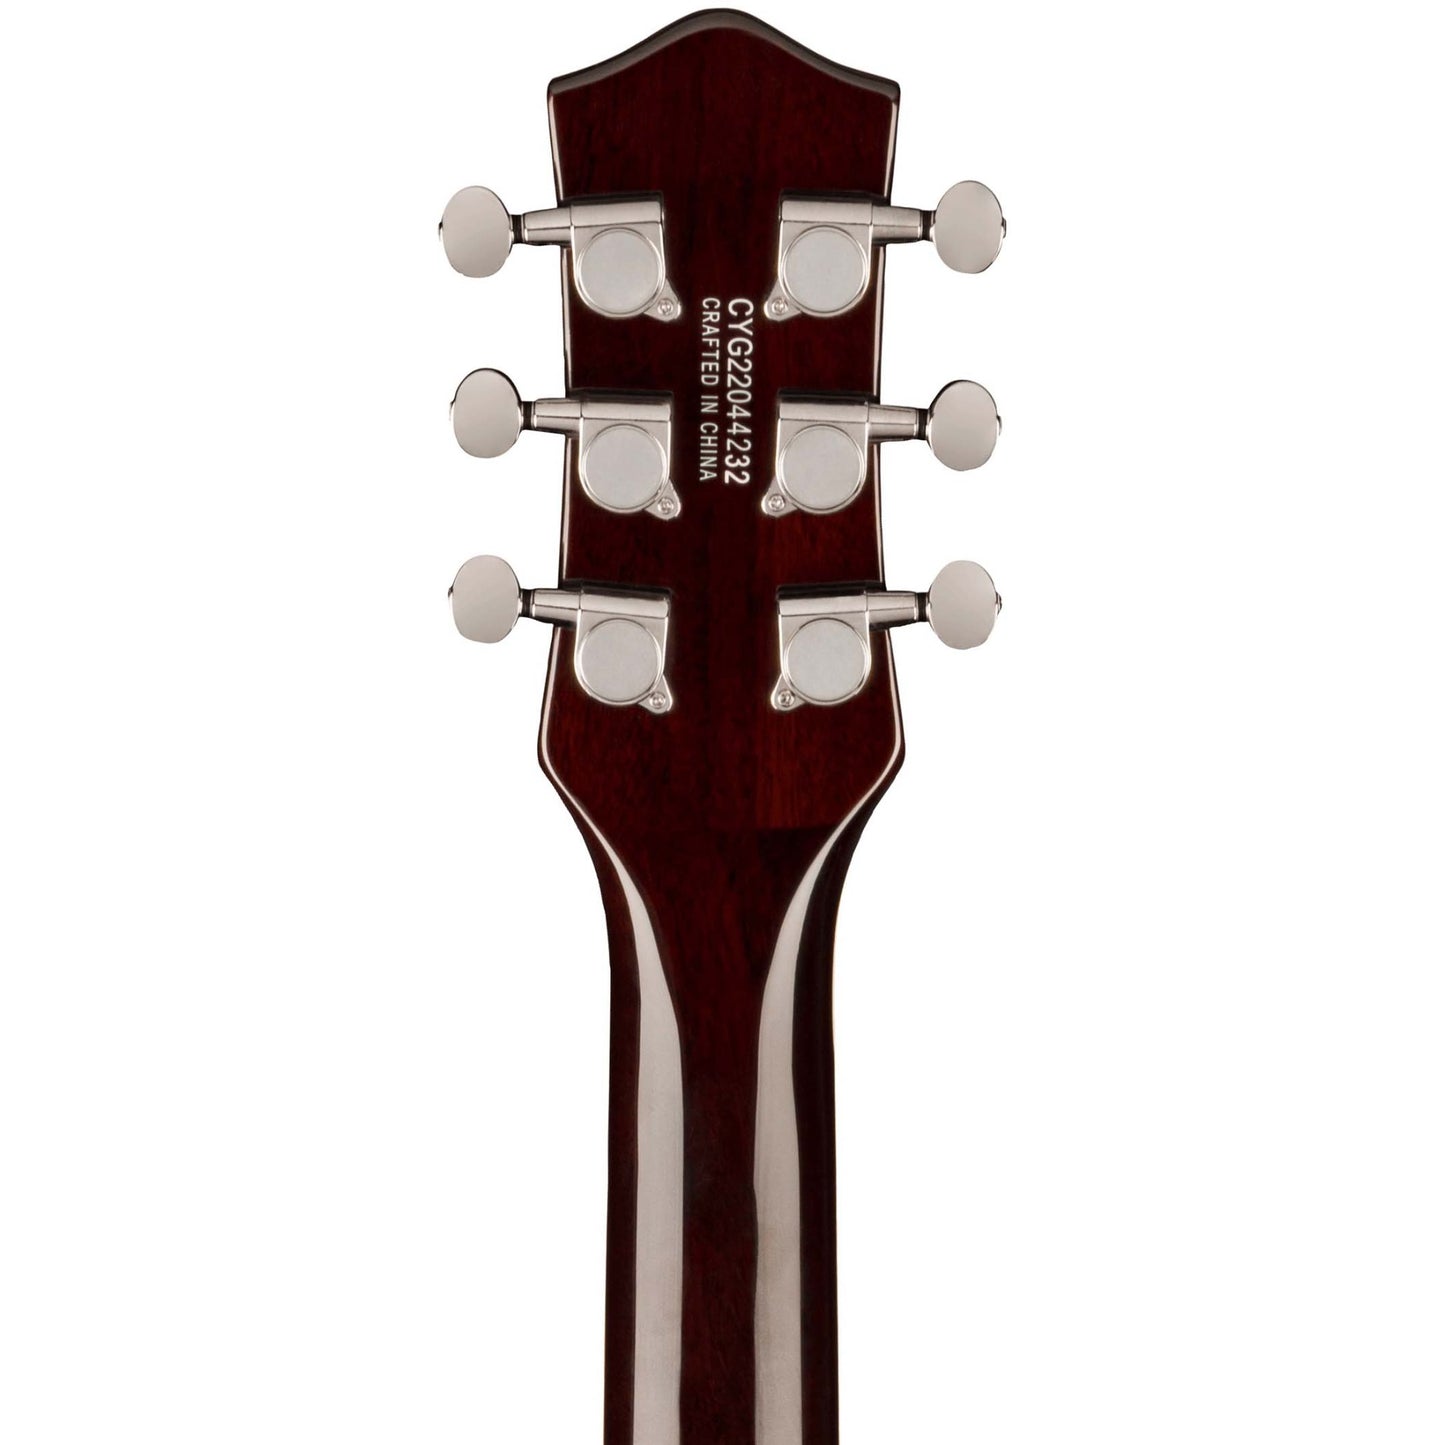 Gretsch G5210-P90 Electromatic Jet Electric Guitar in Broadway Jade